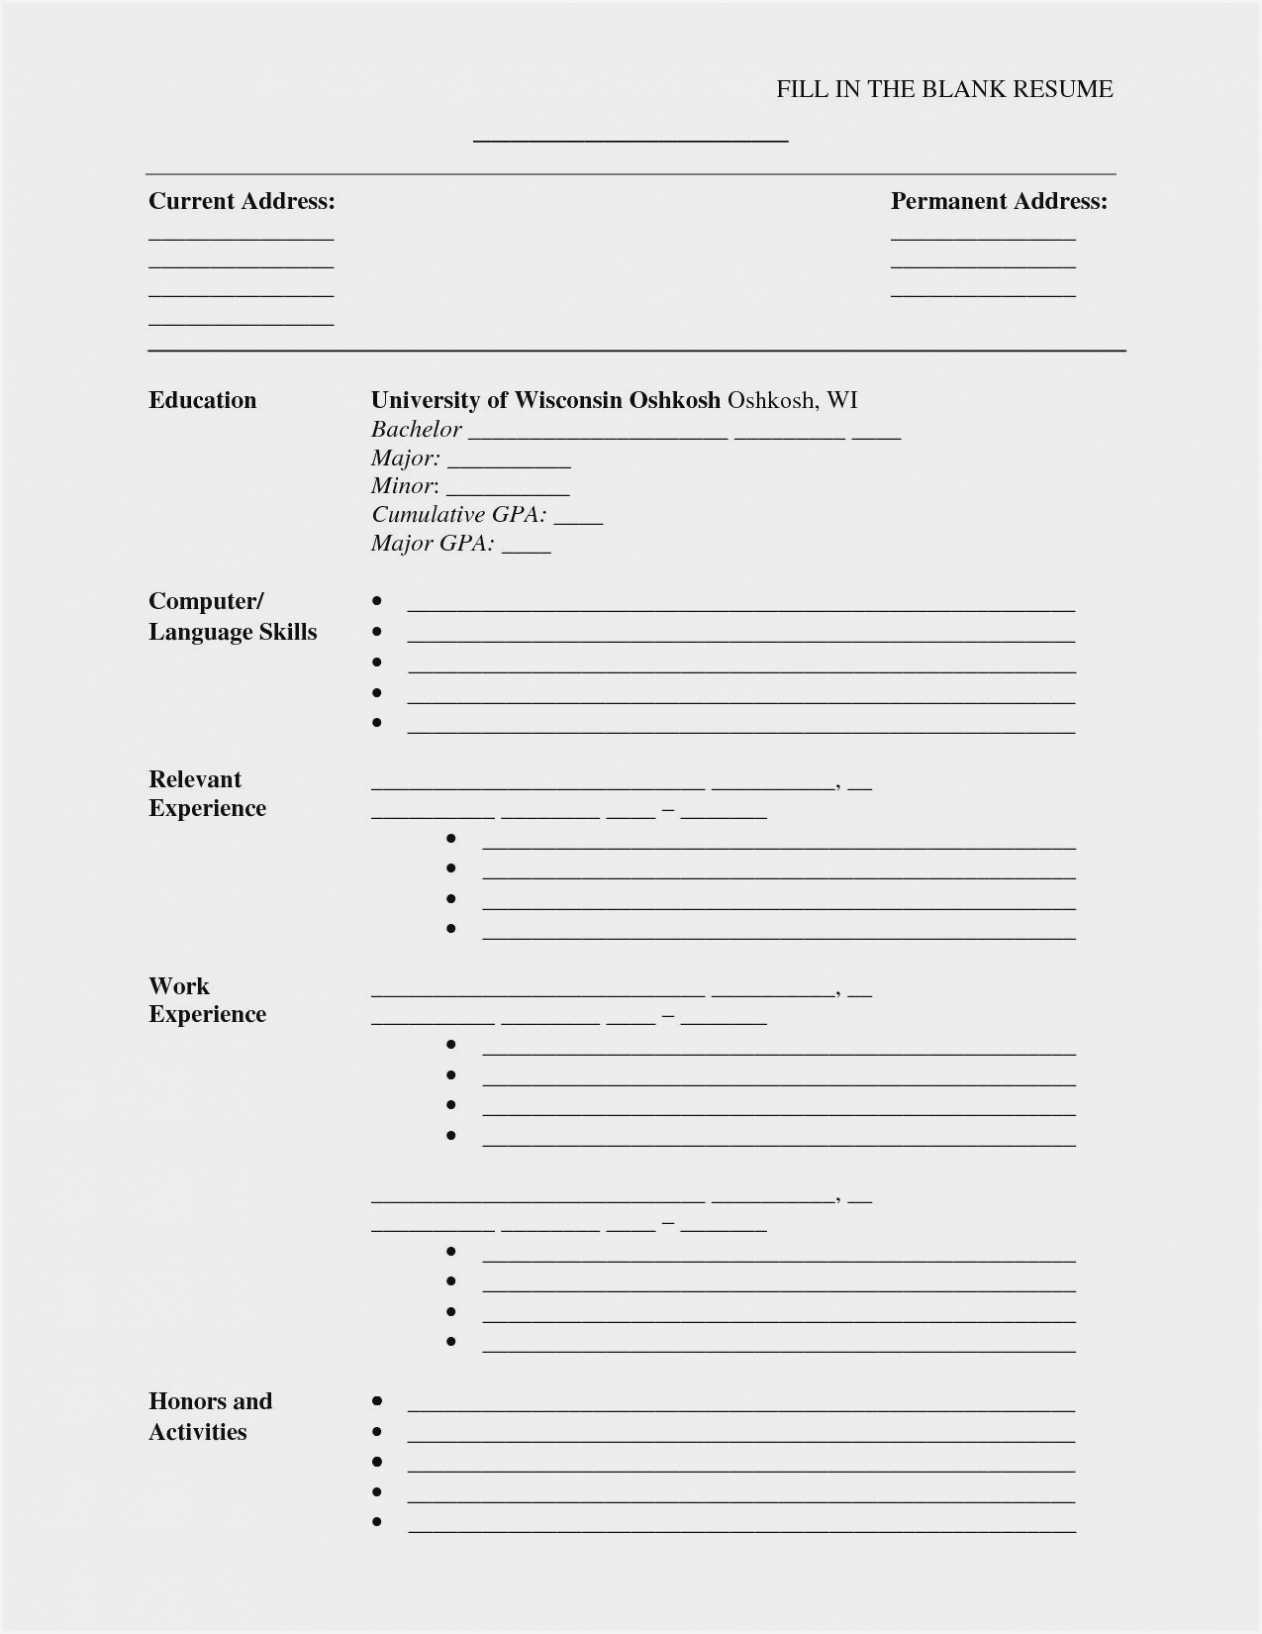 Blank Cv Format Word Download - Resume : Resume Sample #3945 throughout Free Blank Resume Templates For Microsoft Word